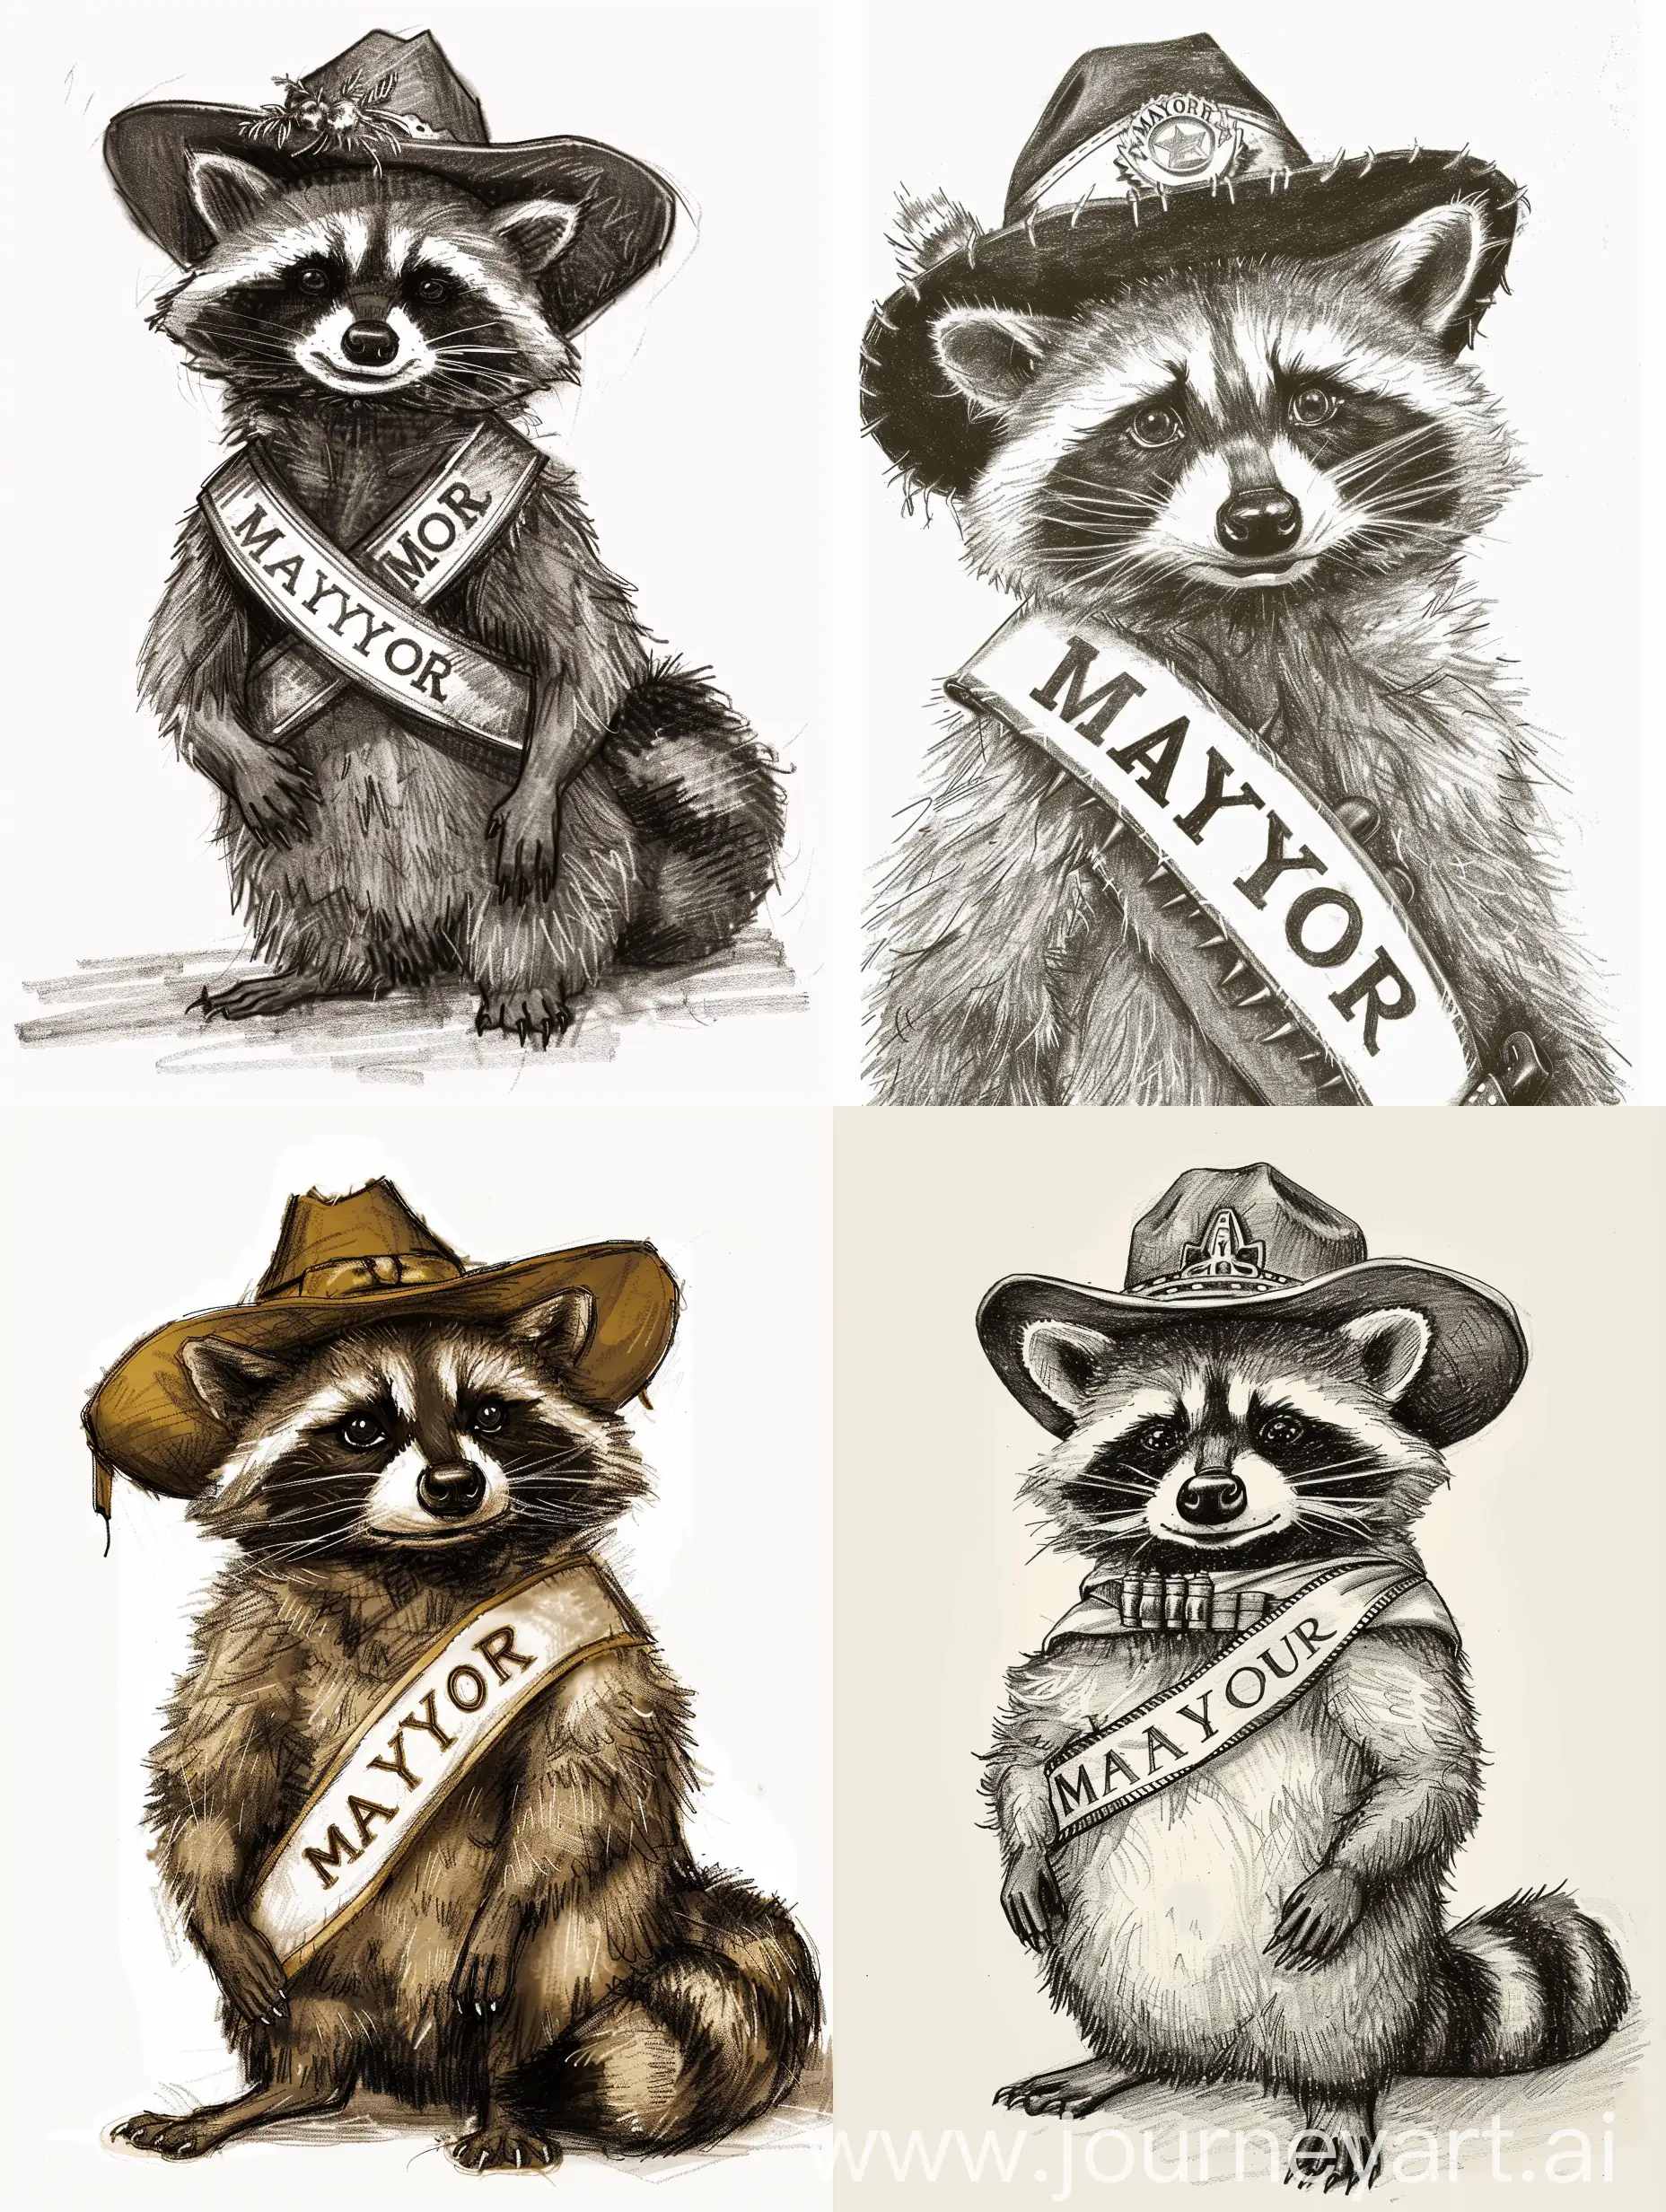 Cartoonish-Mayor-Raccoon-in-Western-Hat-and-Sash-Promo-Poster-Sketch